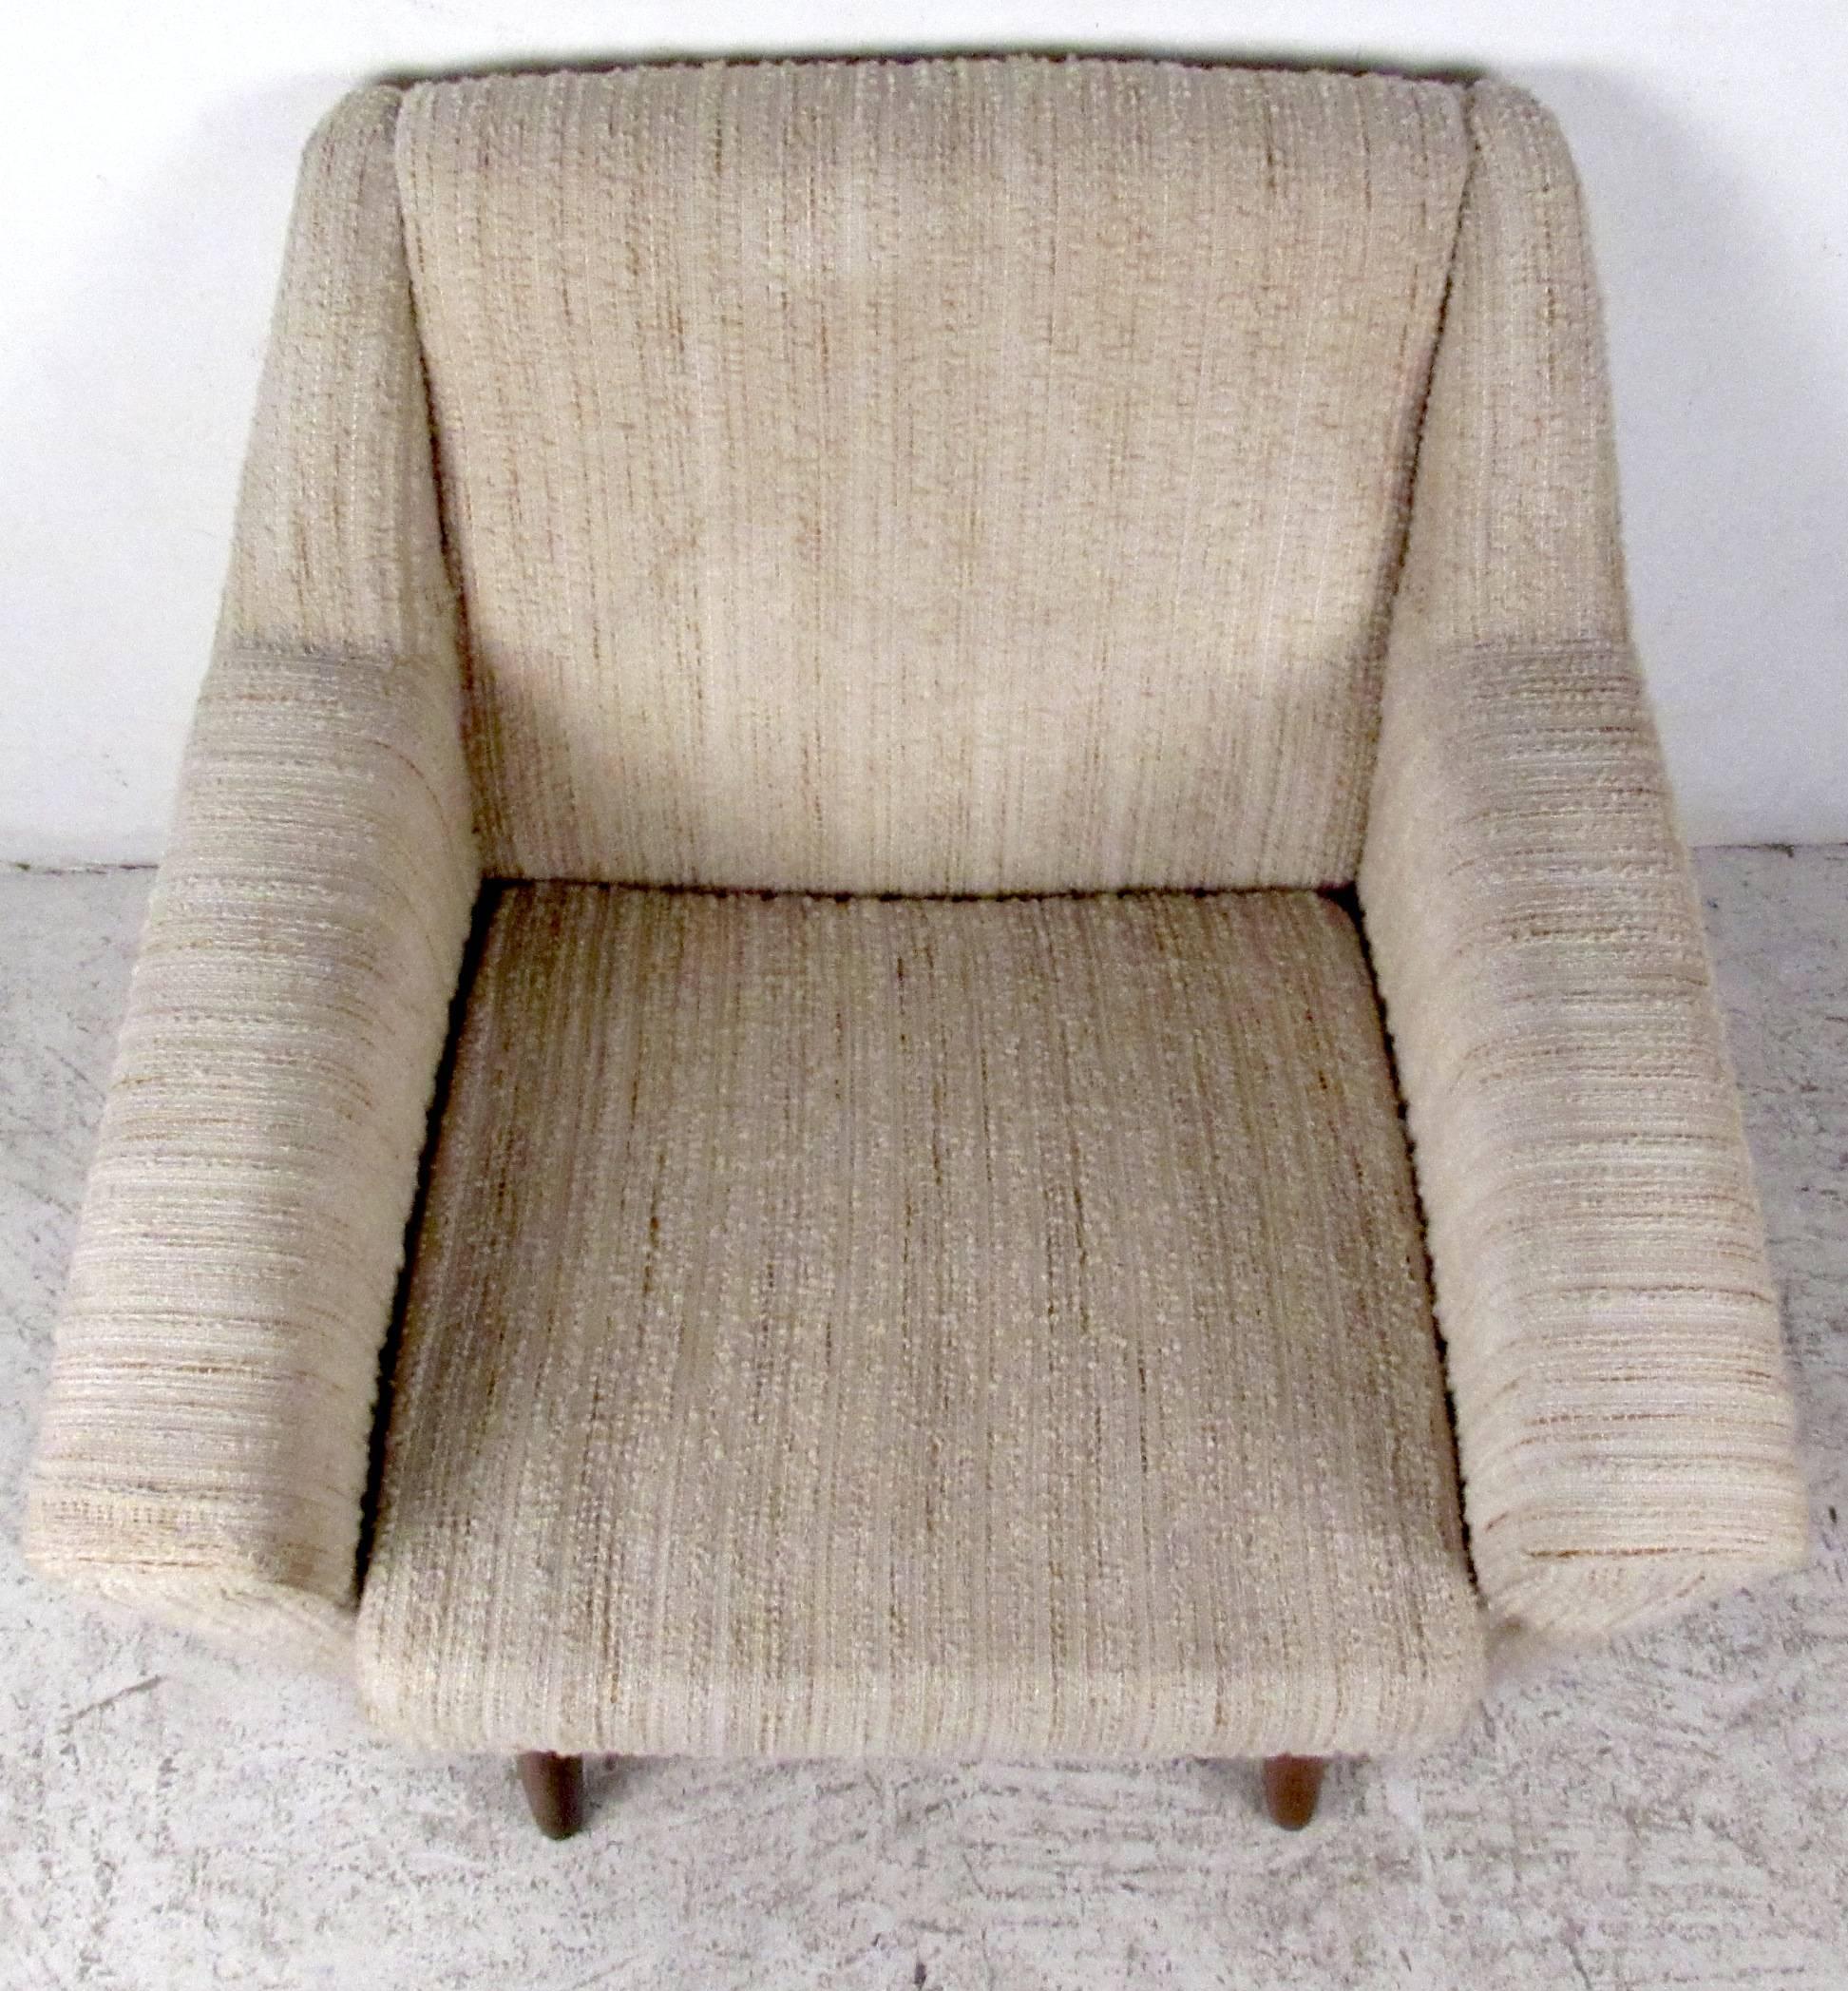 Mid-Century Modern Vintage Modern Lounge Chair For Sale